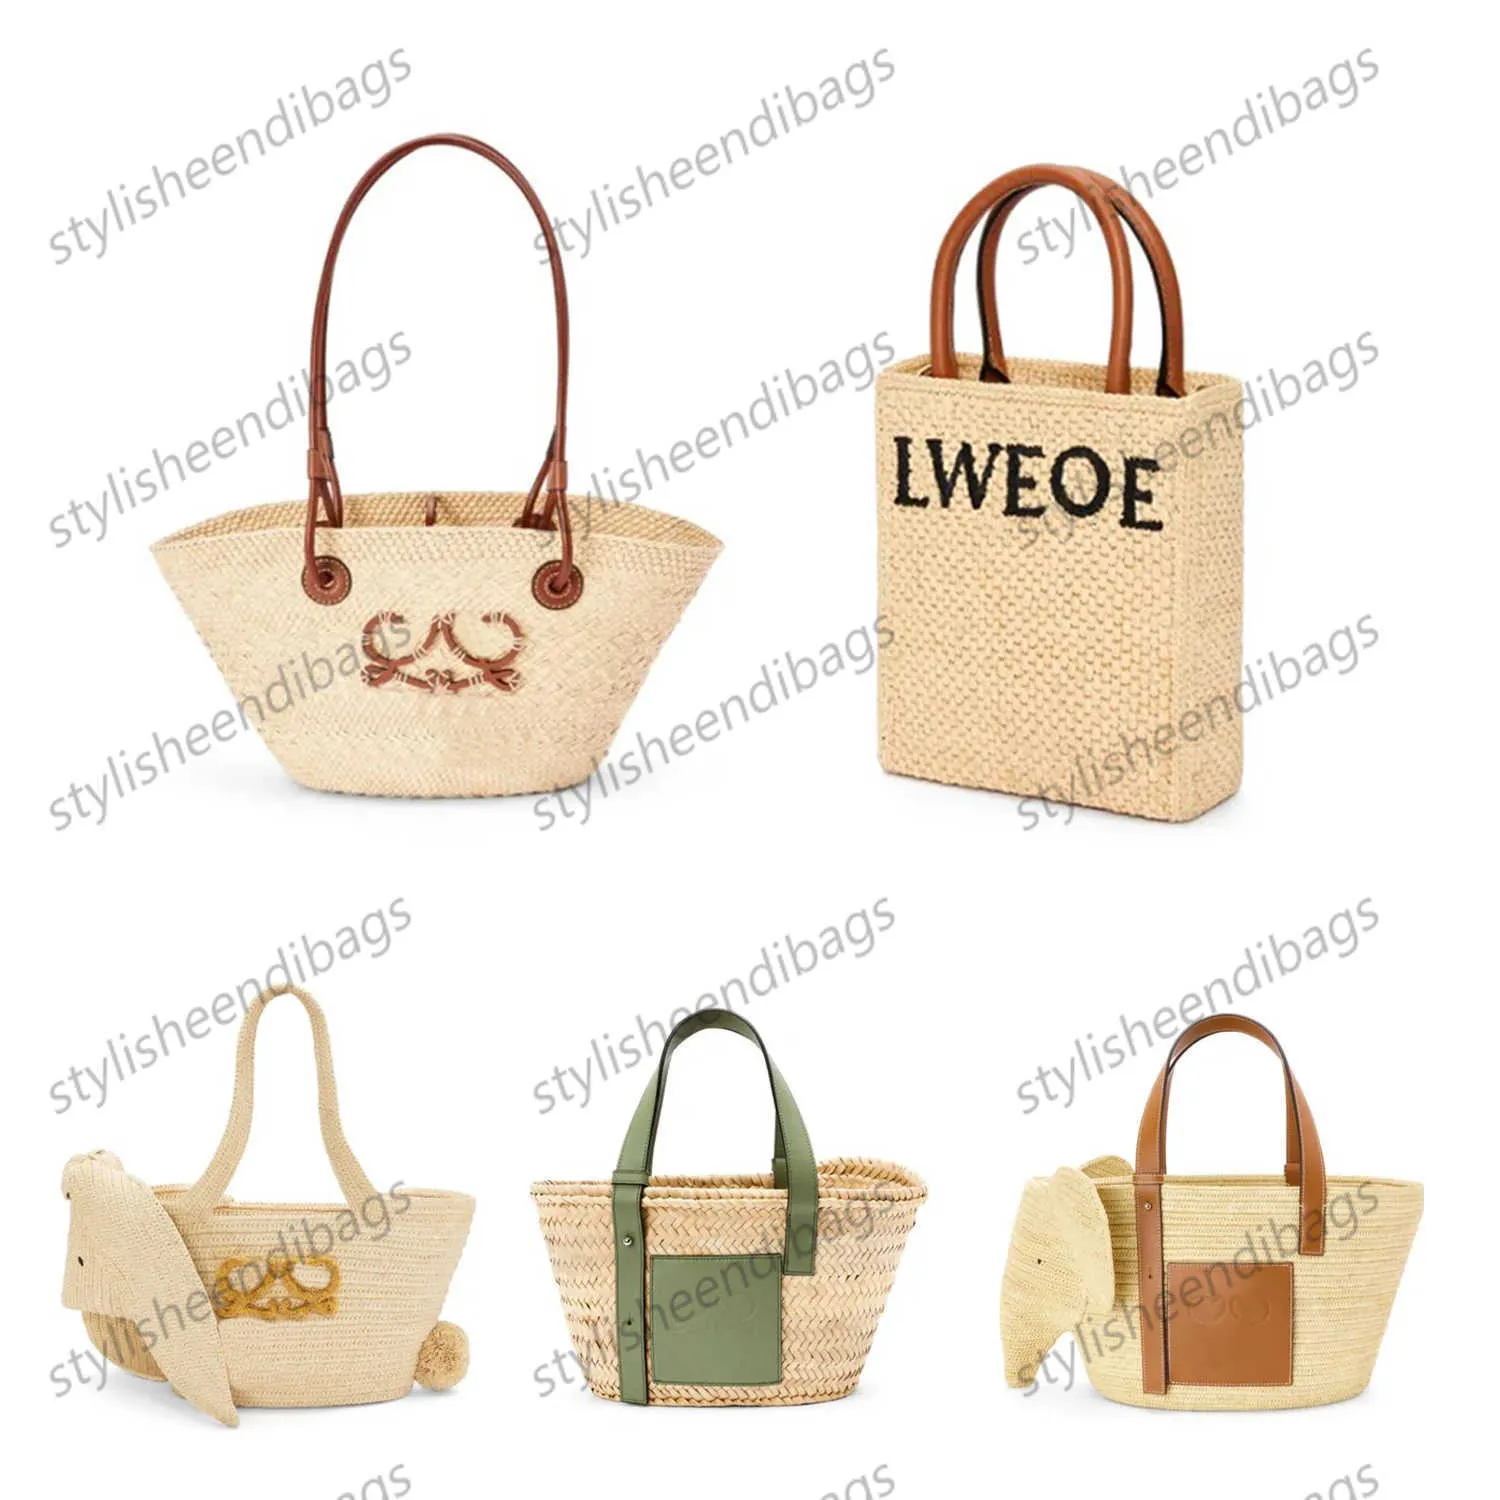 stylisheendibags Raffias basket Straw anagram Bag tote handbag Fold Shopper Designer Shoulder bucket bag luxury top handle summer weave travel Beach bags